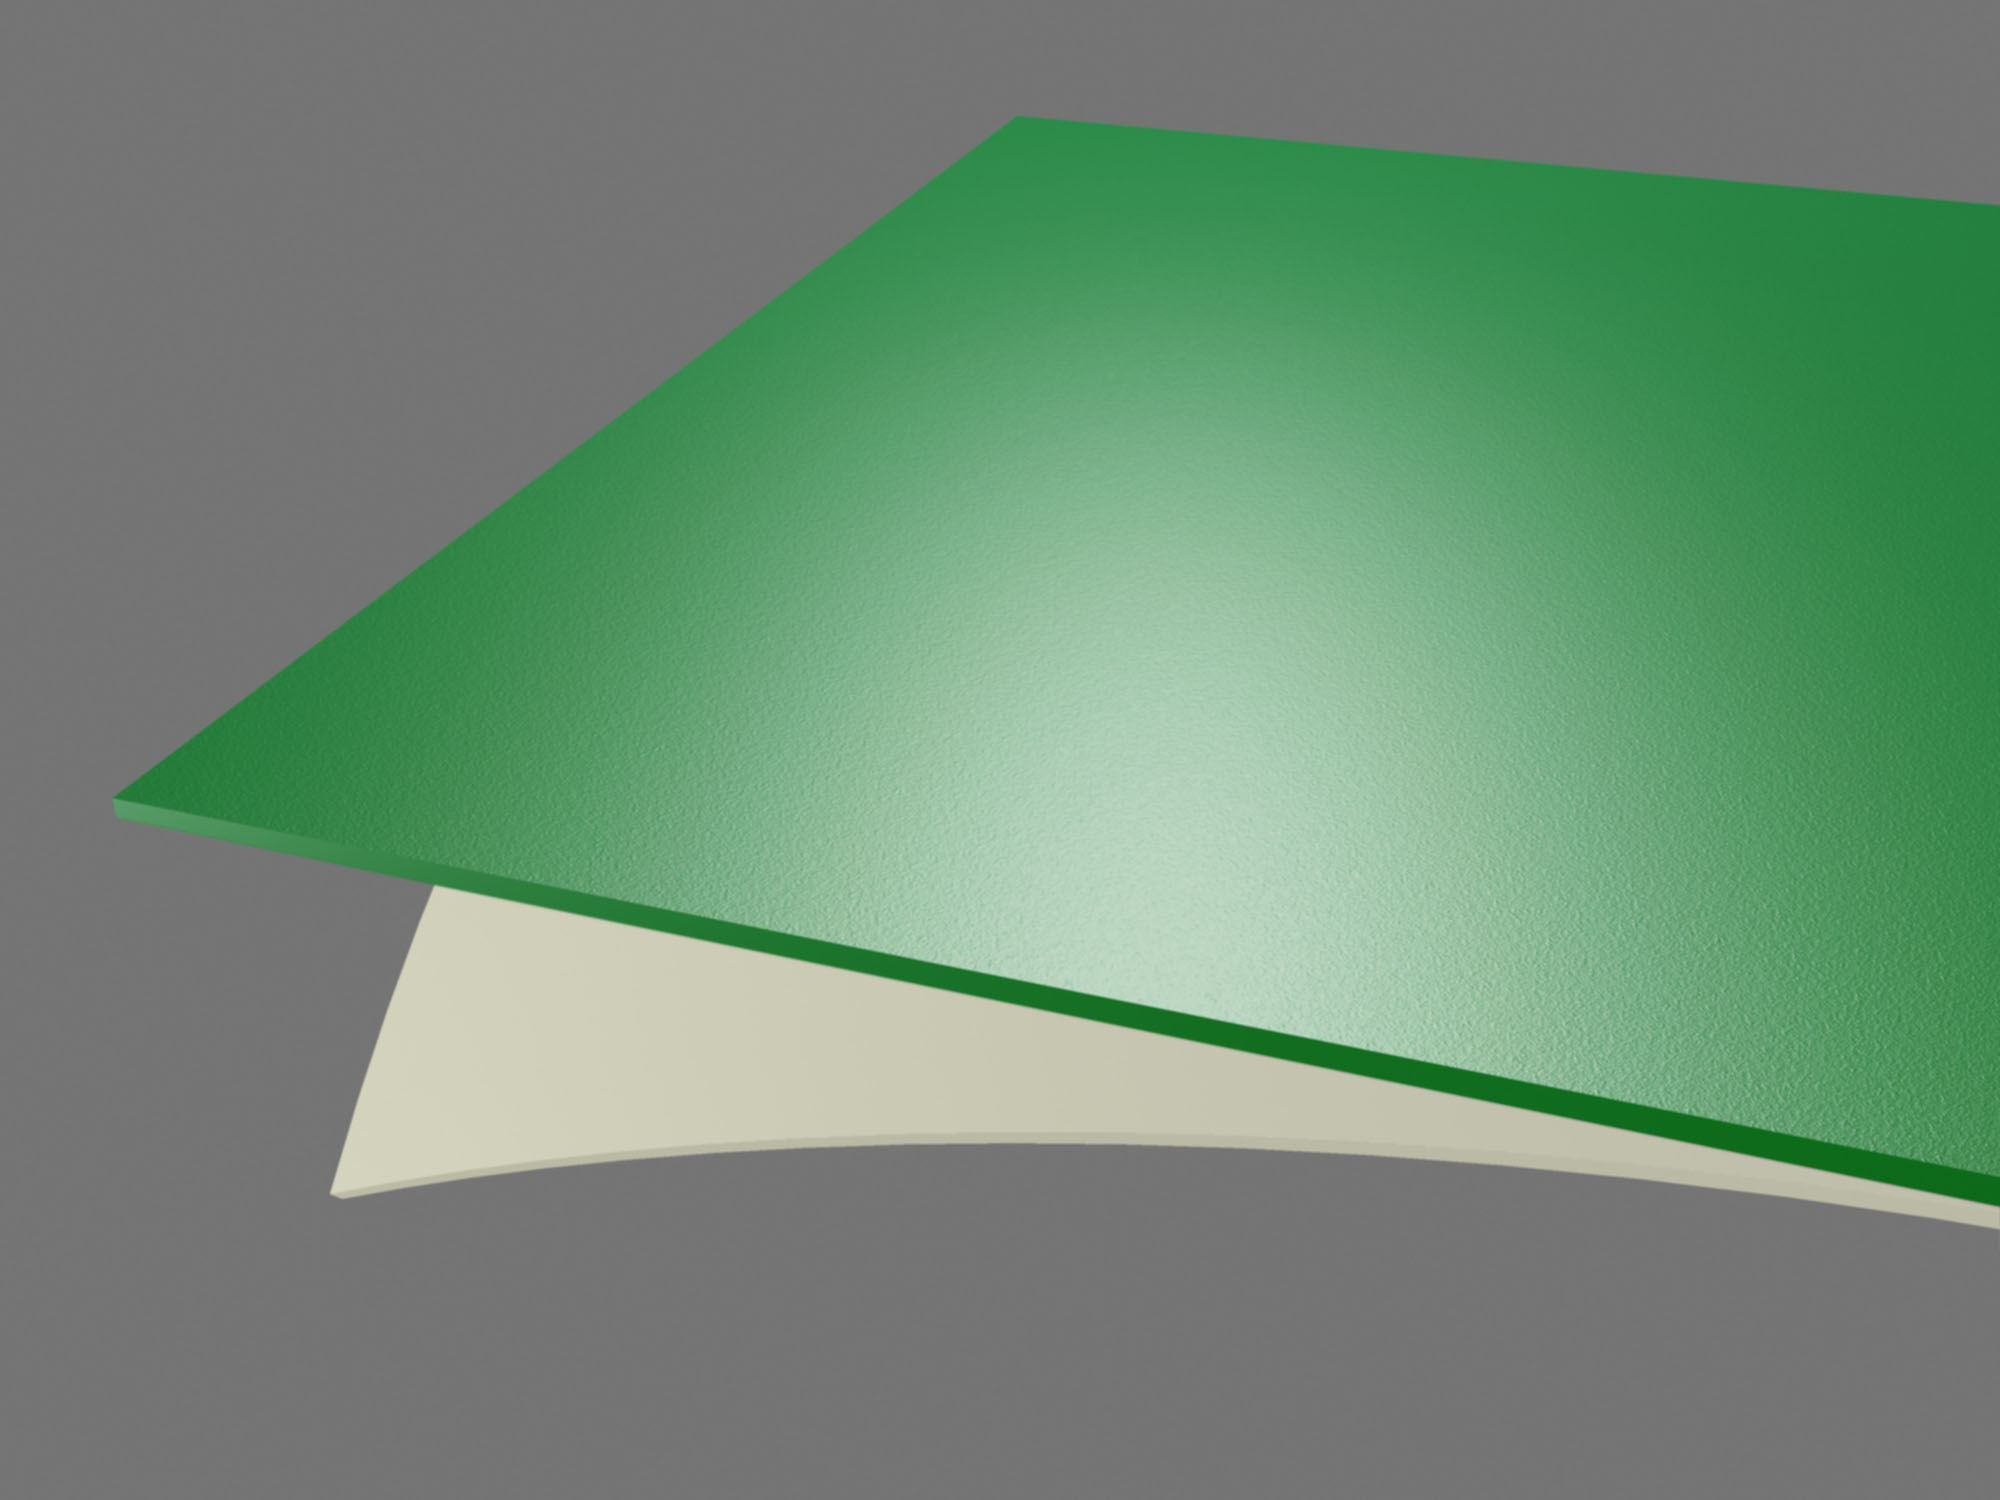 Material Backing Layers original 3D illustration for ShinodaUSA by Hogan Design